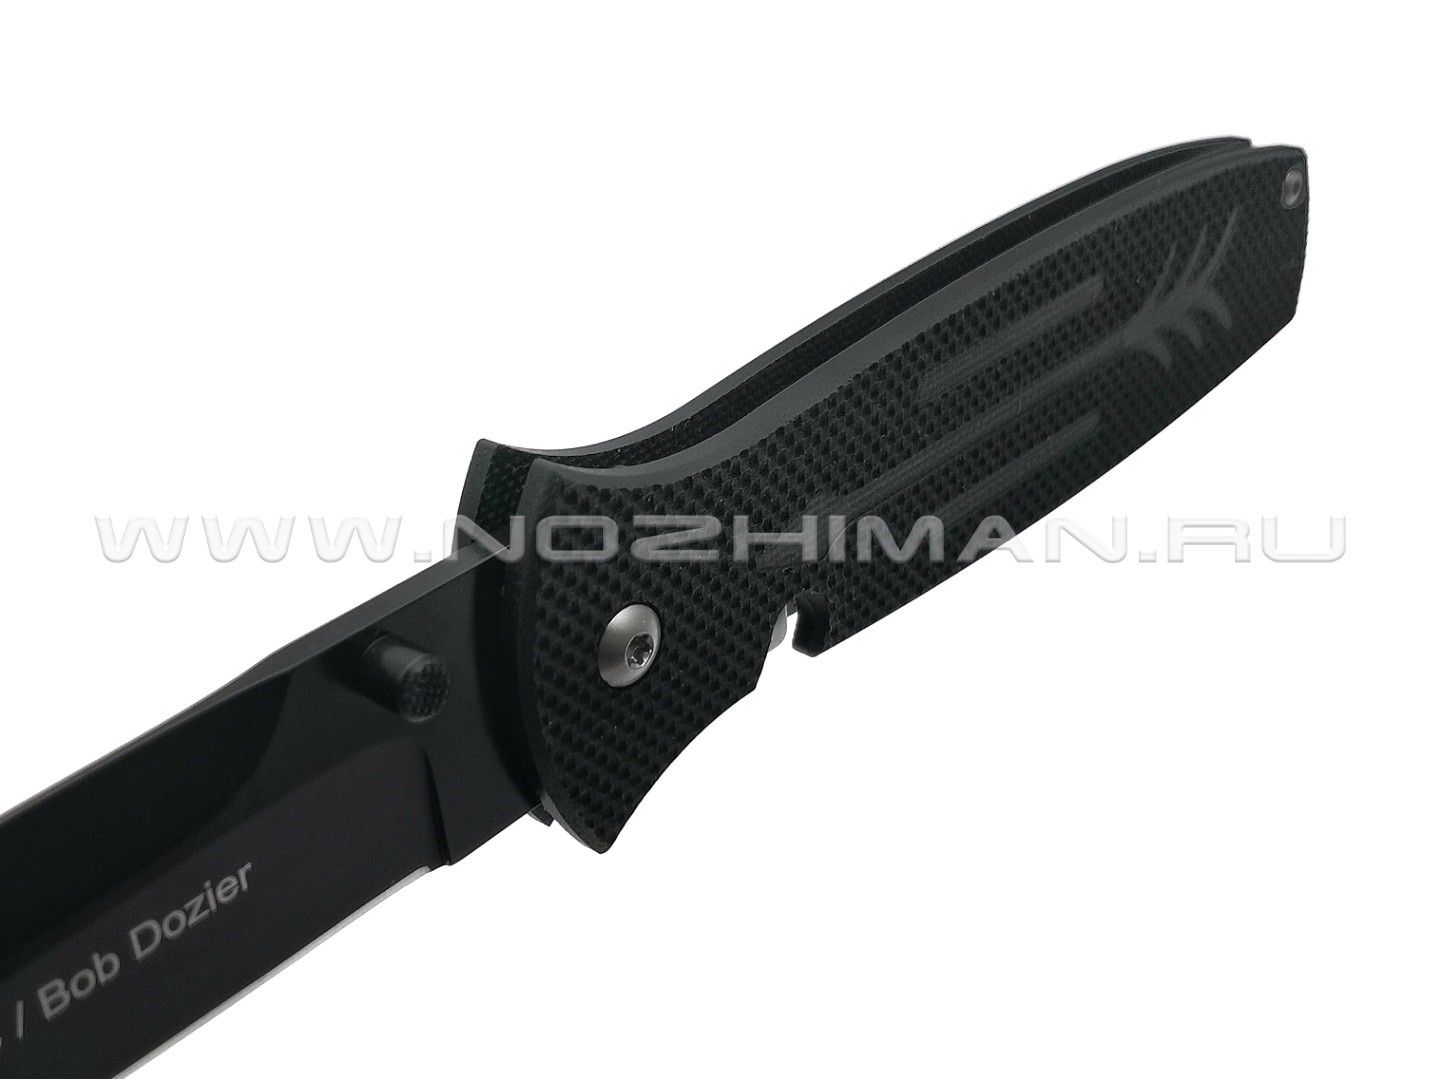 Ontario нож Bob Dozier Arrow Black 9101 сталь D2 рукоять G10